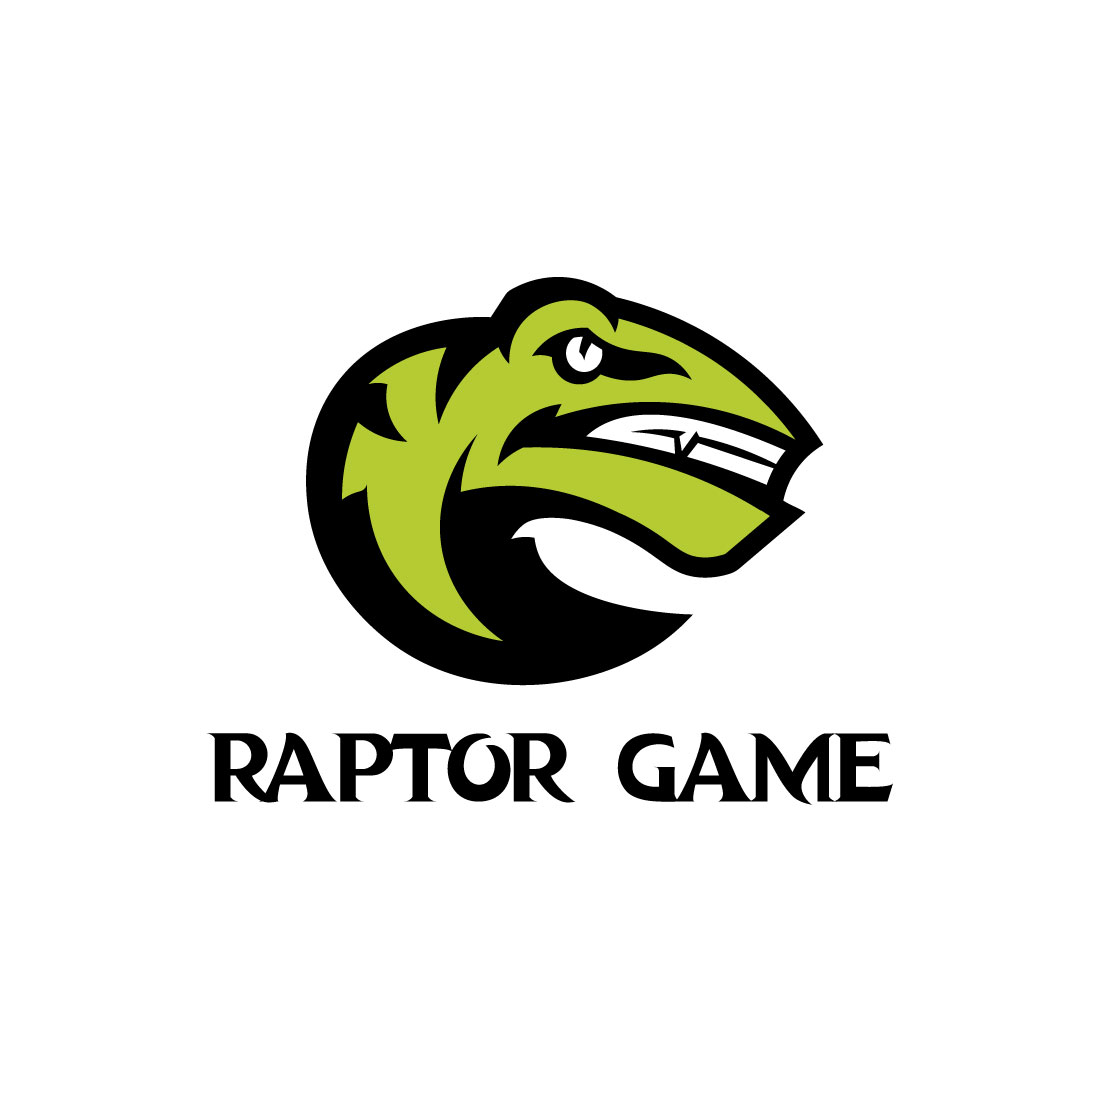 Raptor game Logo cover image.